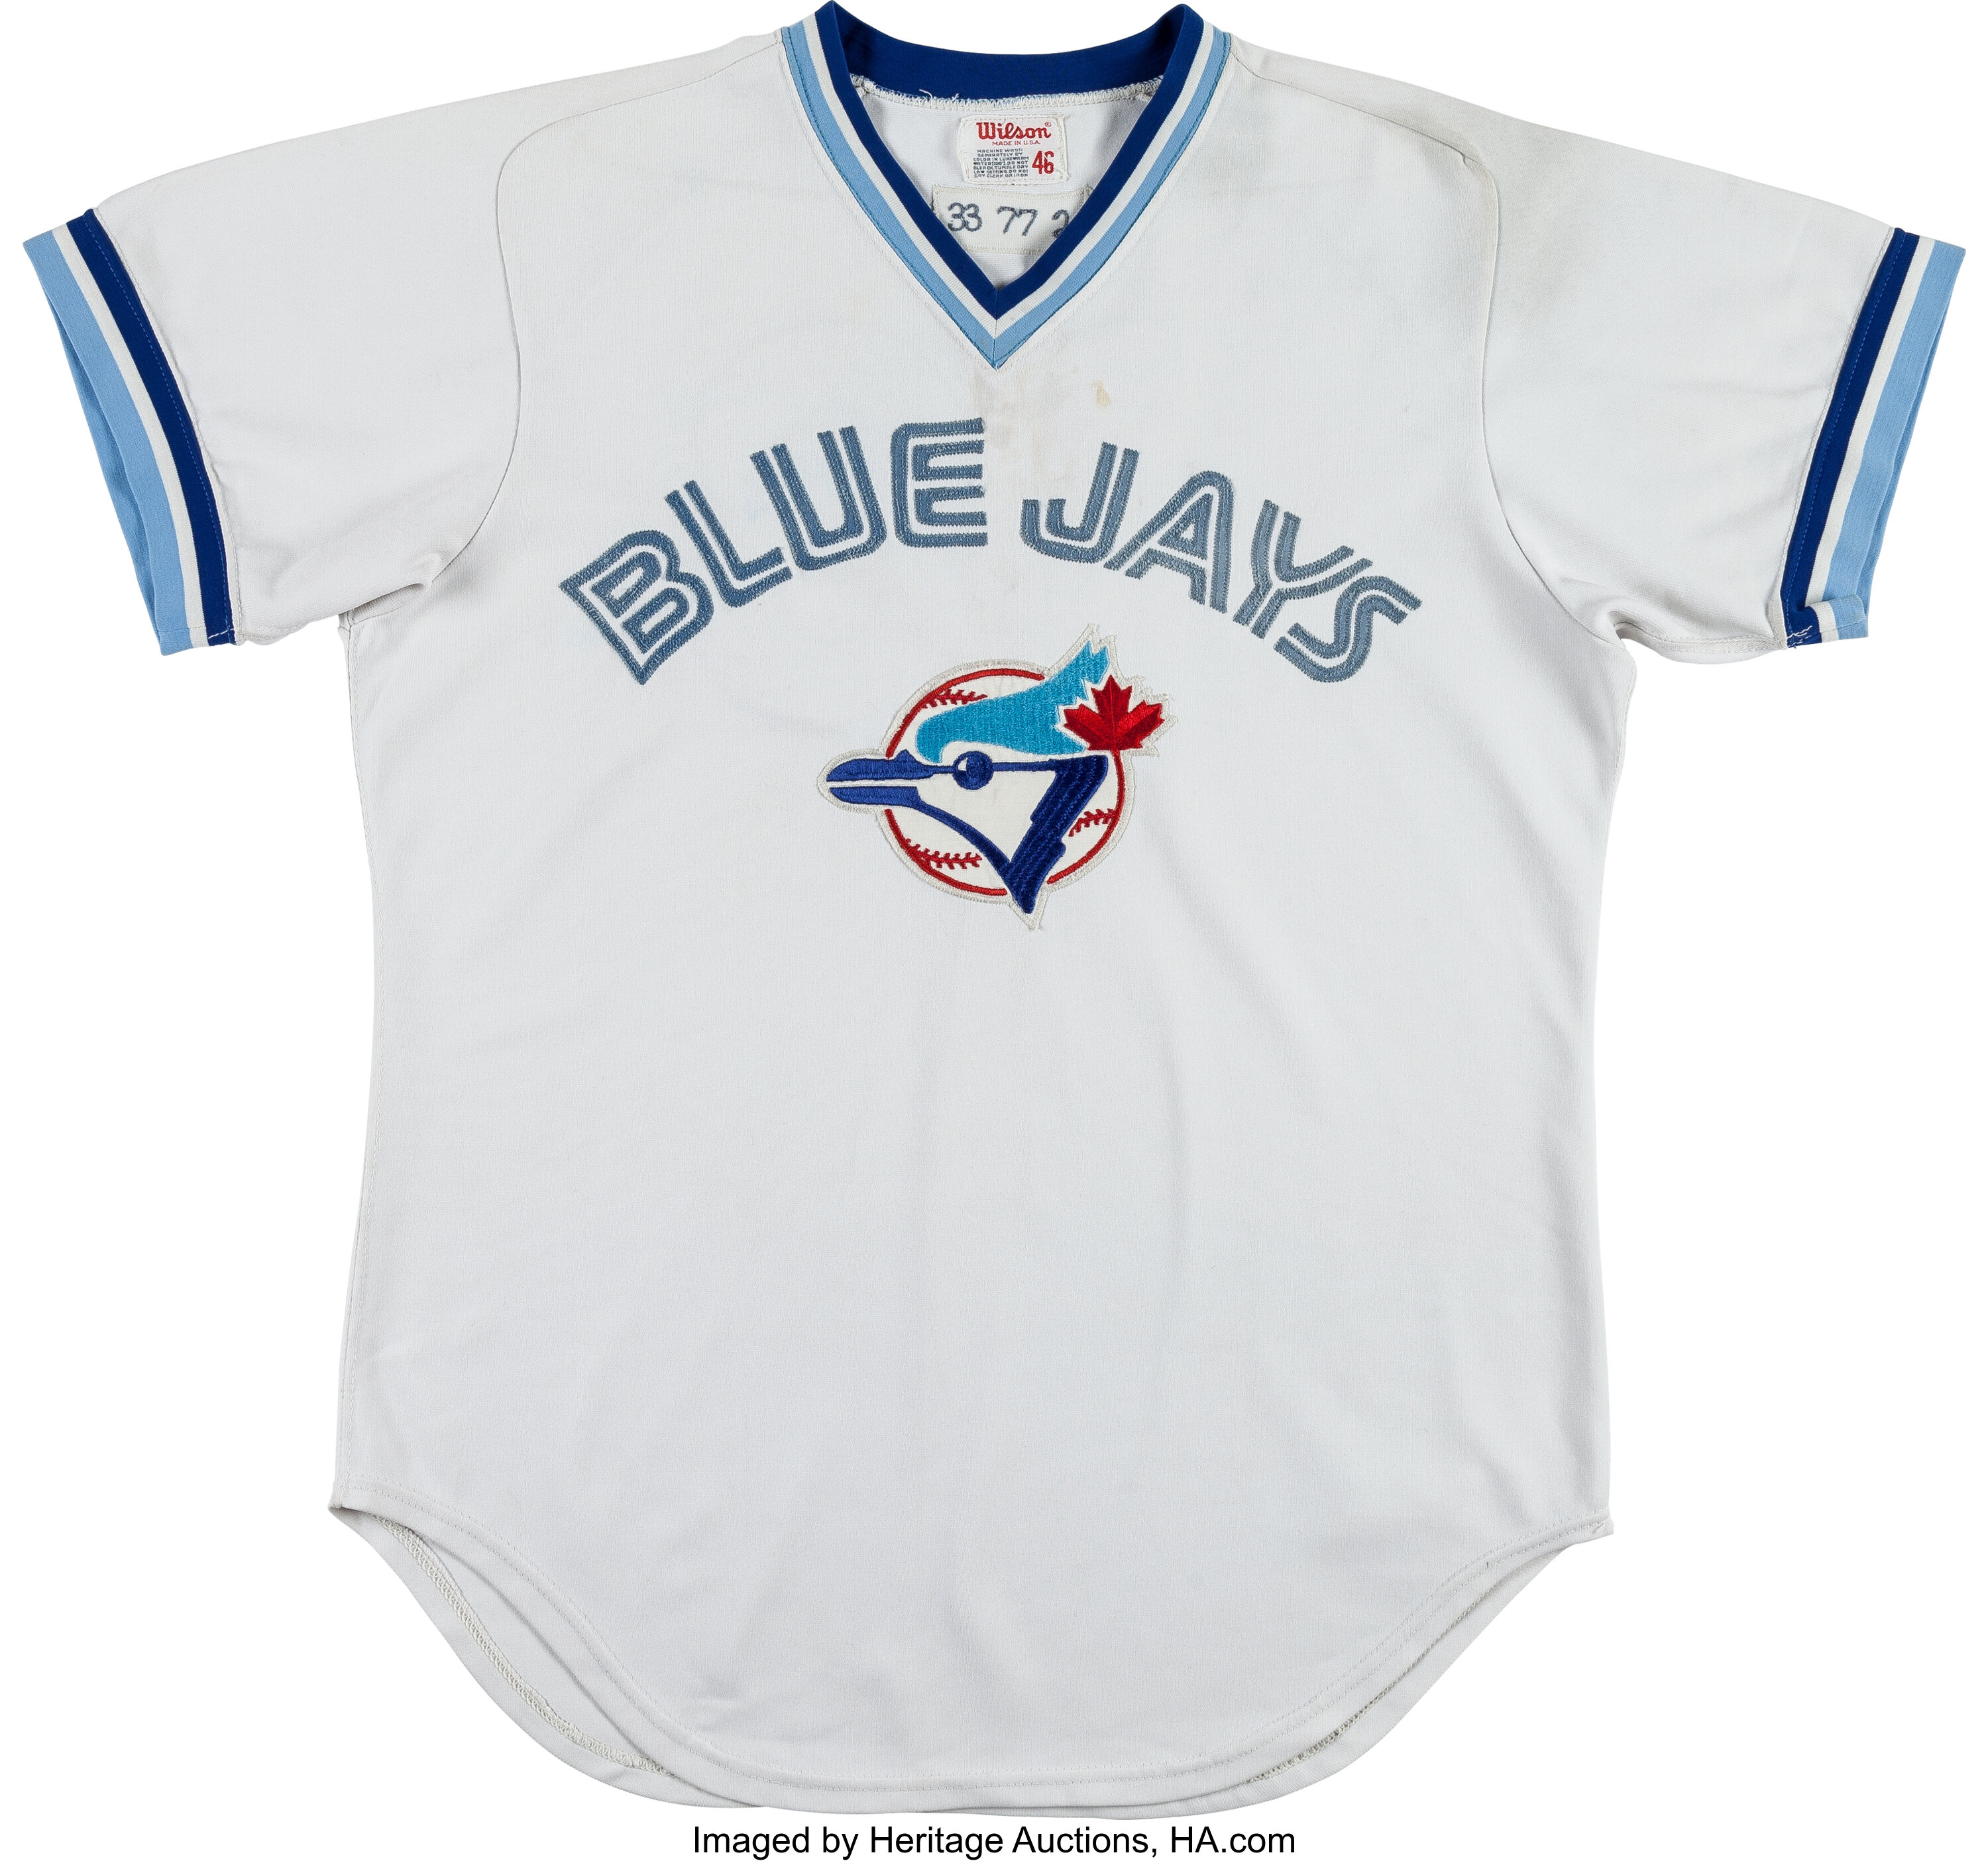 Toronto Blue Jays Baseball Est 1977 Shirt